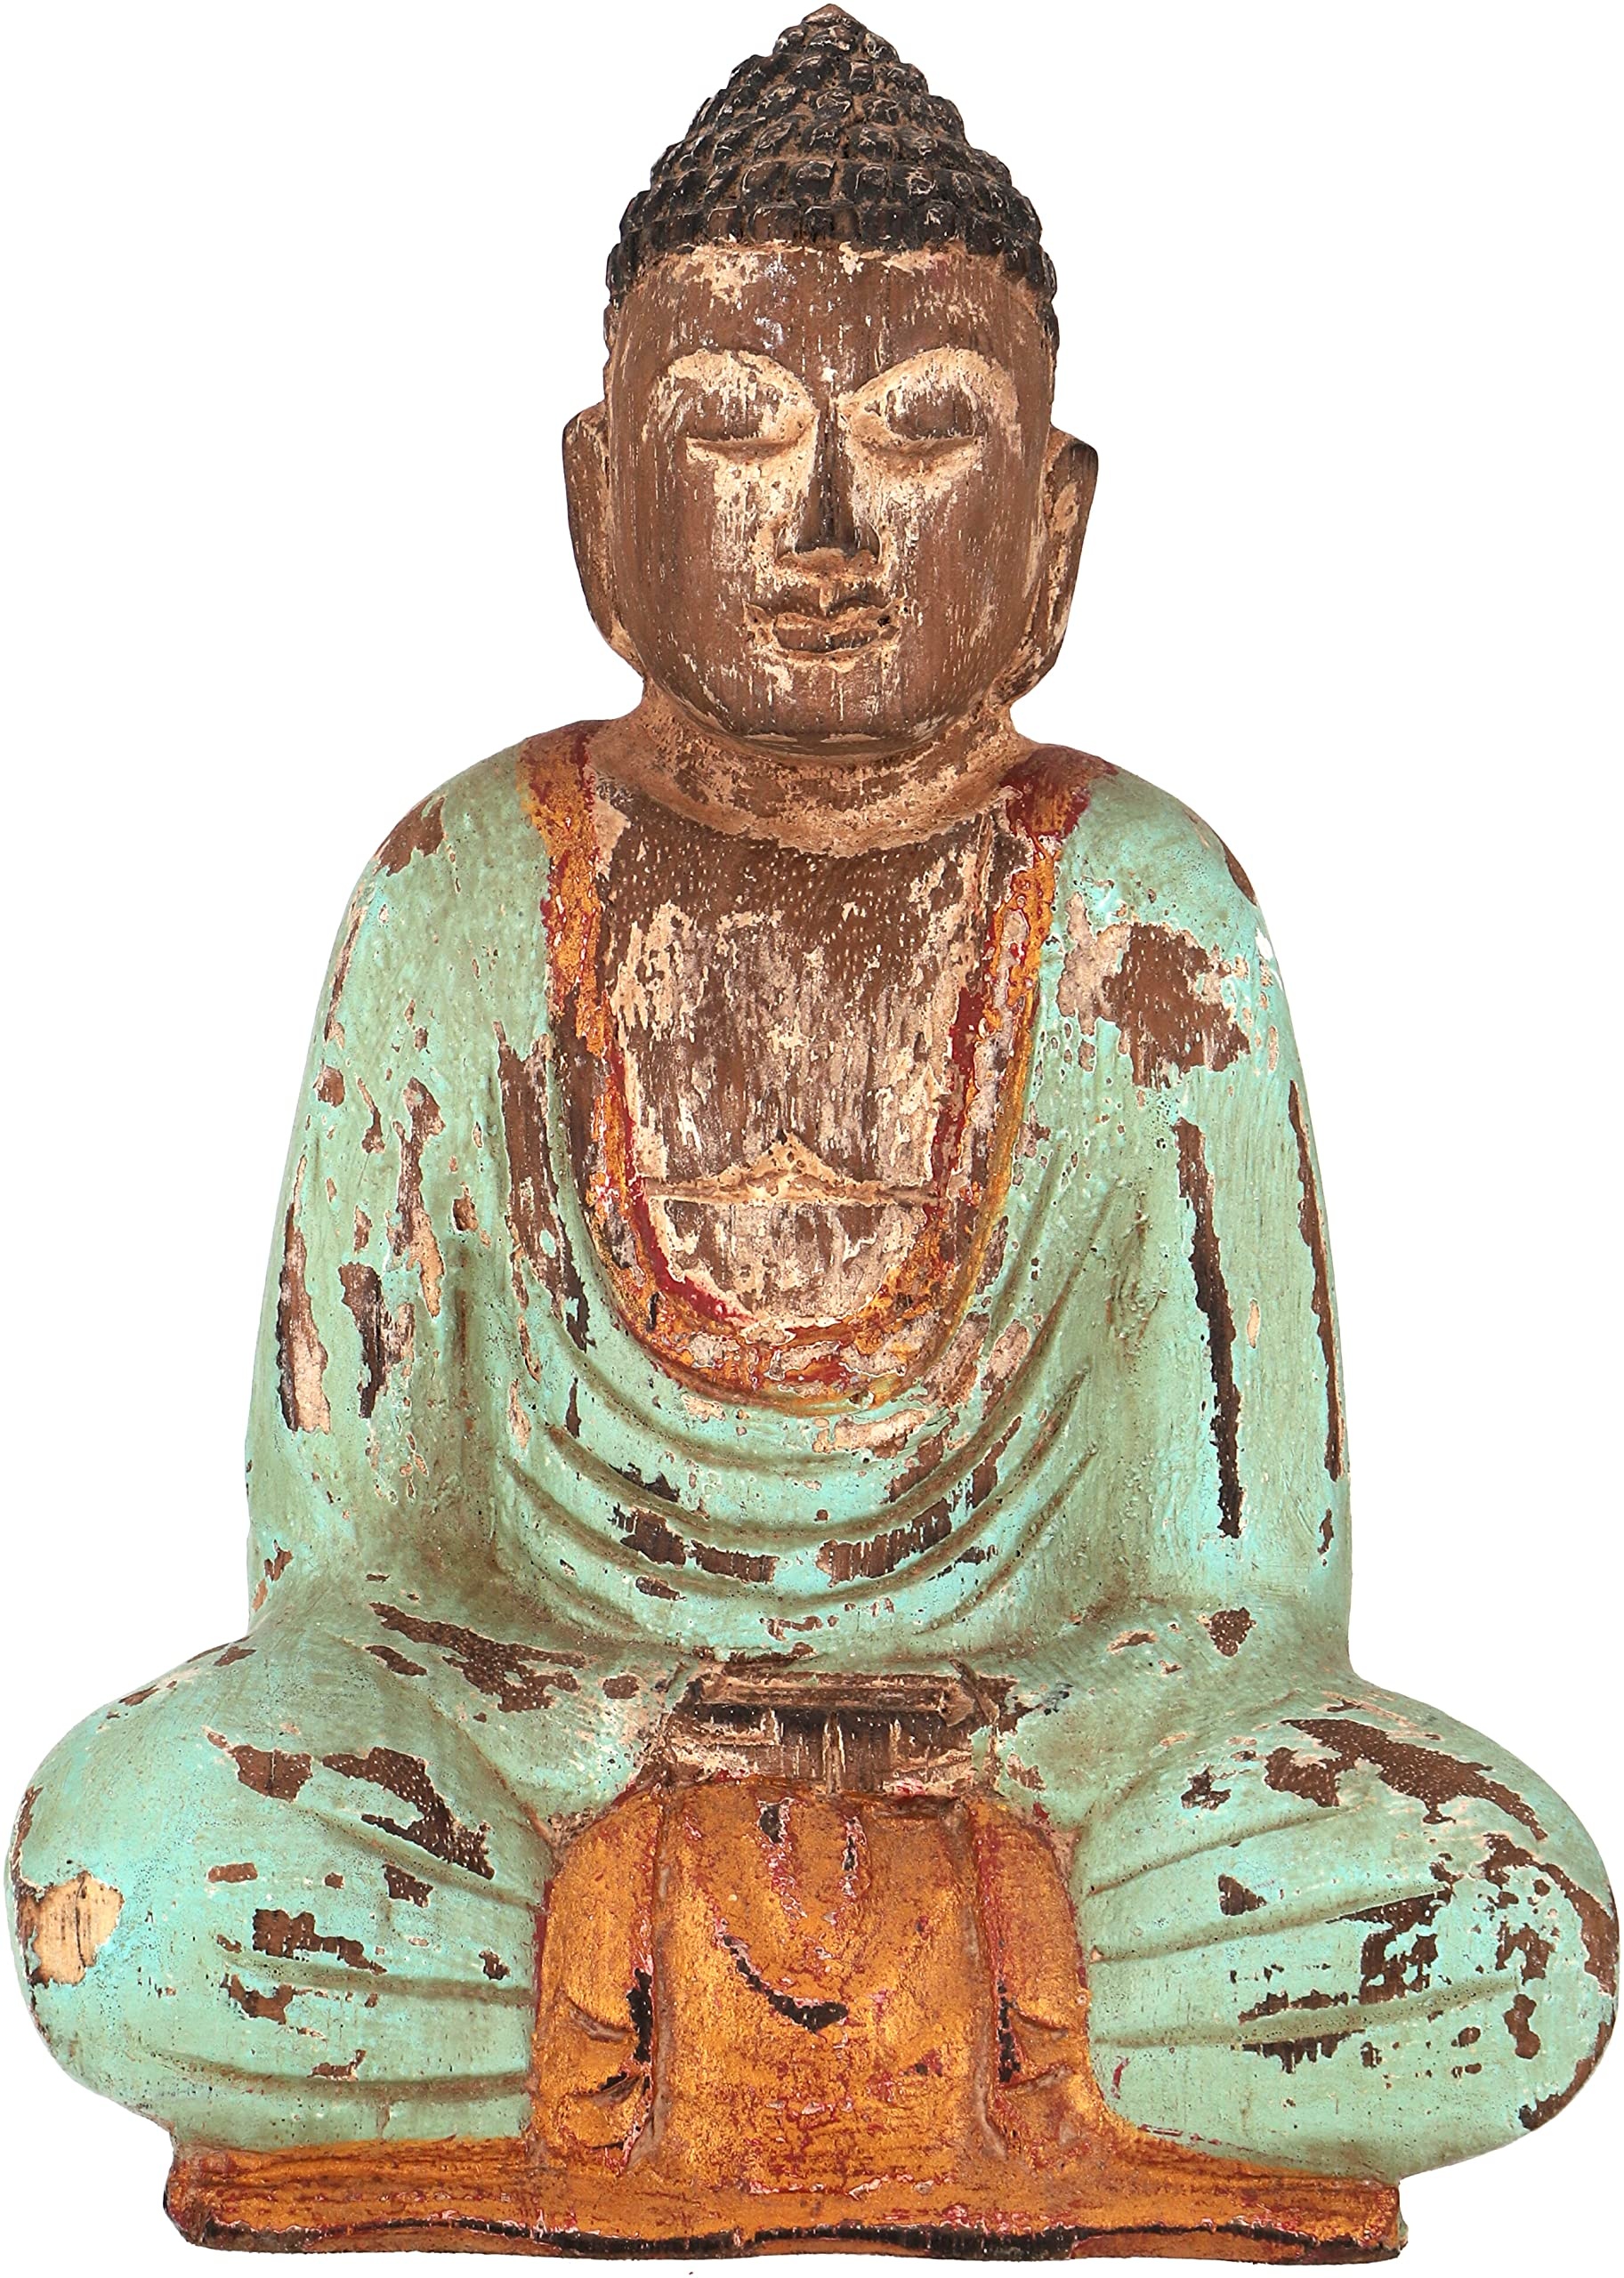 GURU SHOP Sitzender Holzbuddha, Buddha Statue, Handarbeit 21 cm, Antik Grün - Modell 16, Buddhas